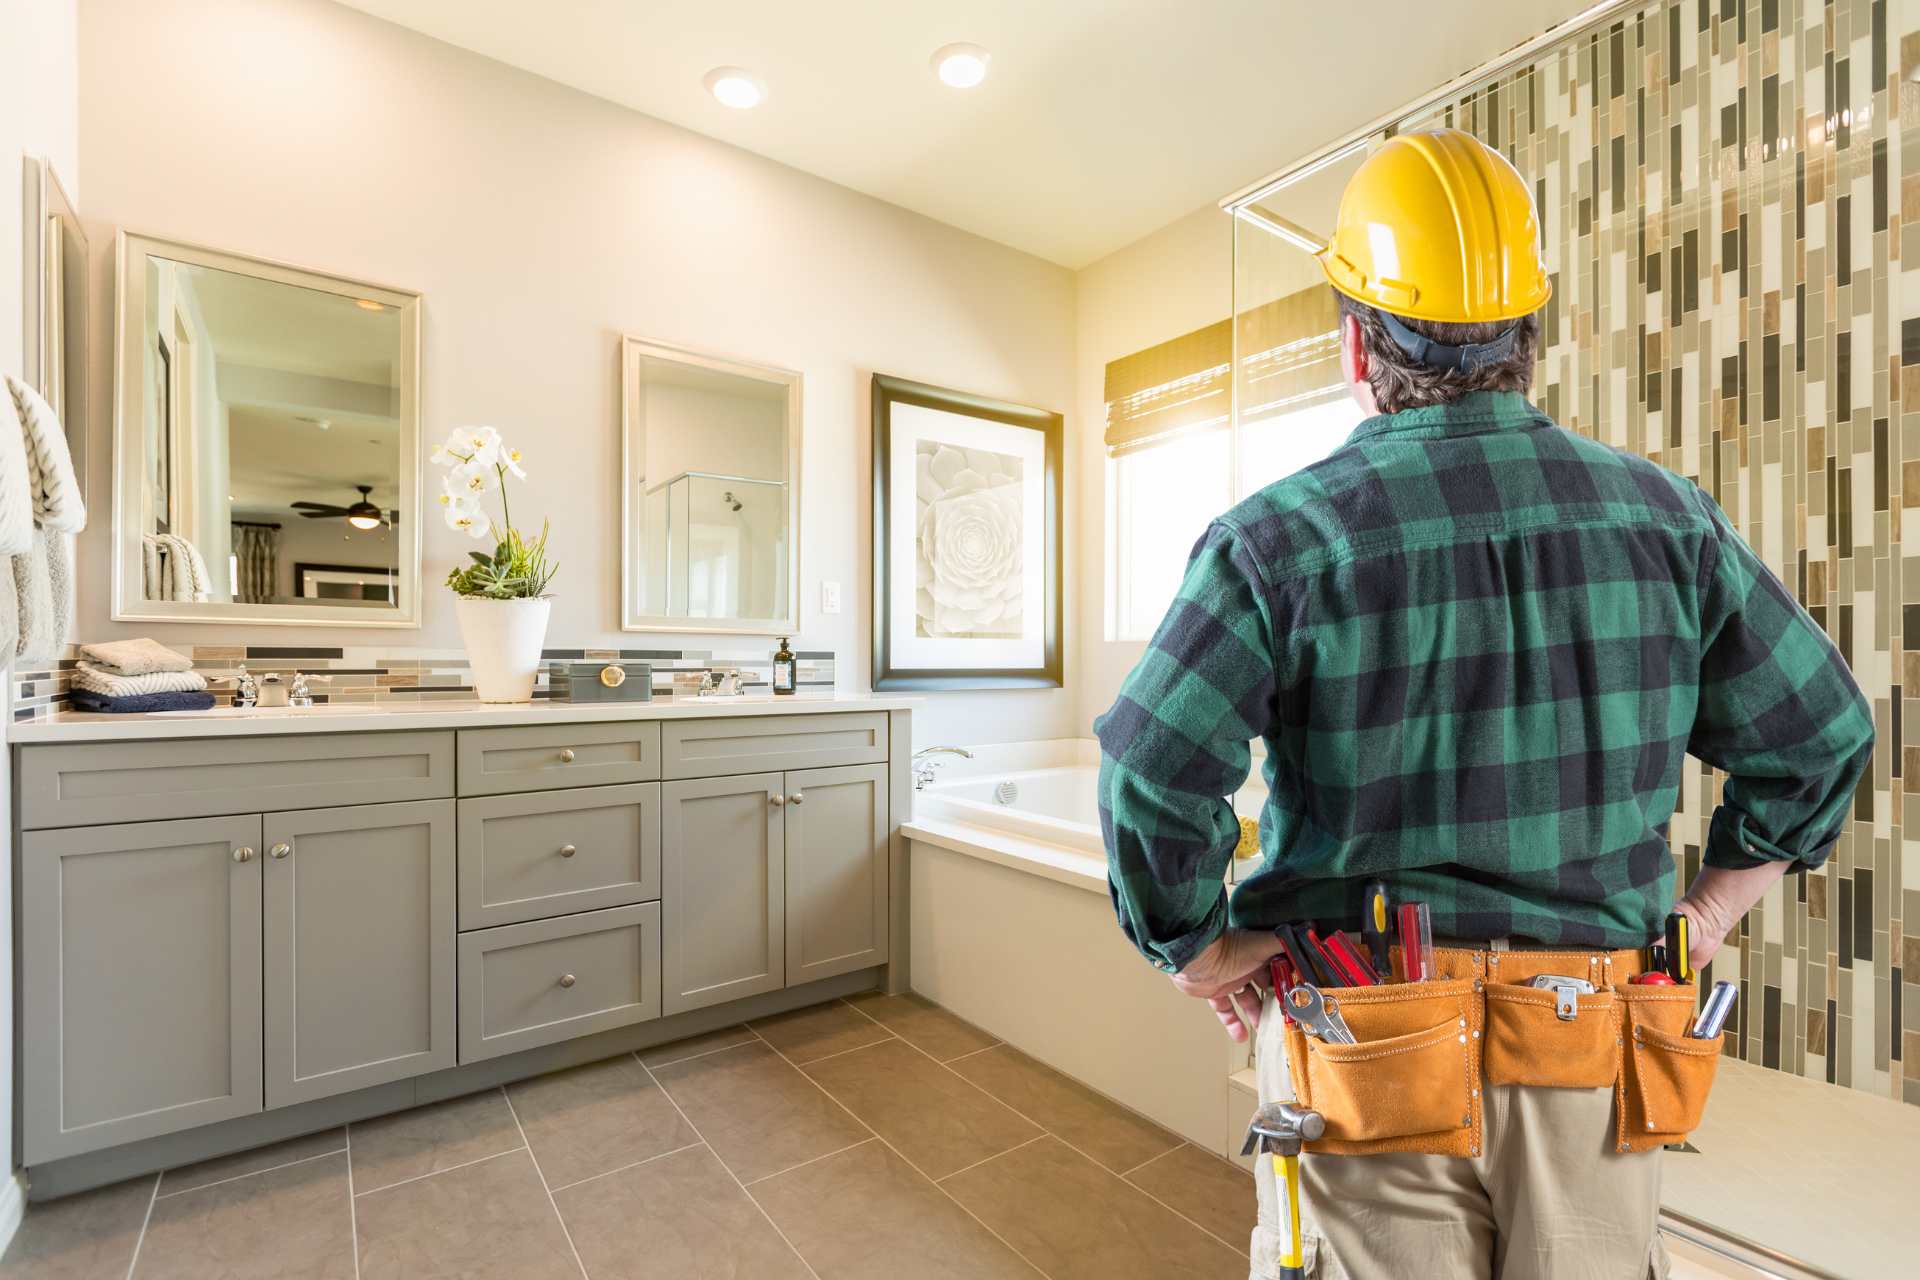 Top 4 Websites to Find Home Renovation Contractors in Canada